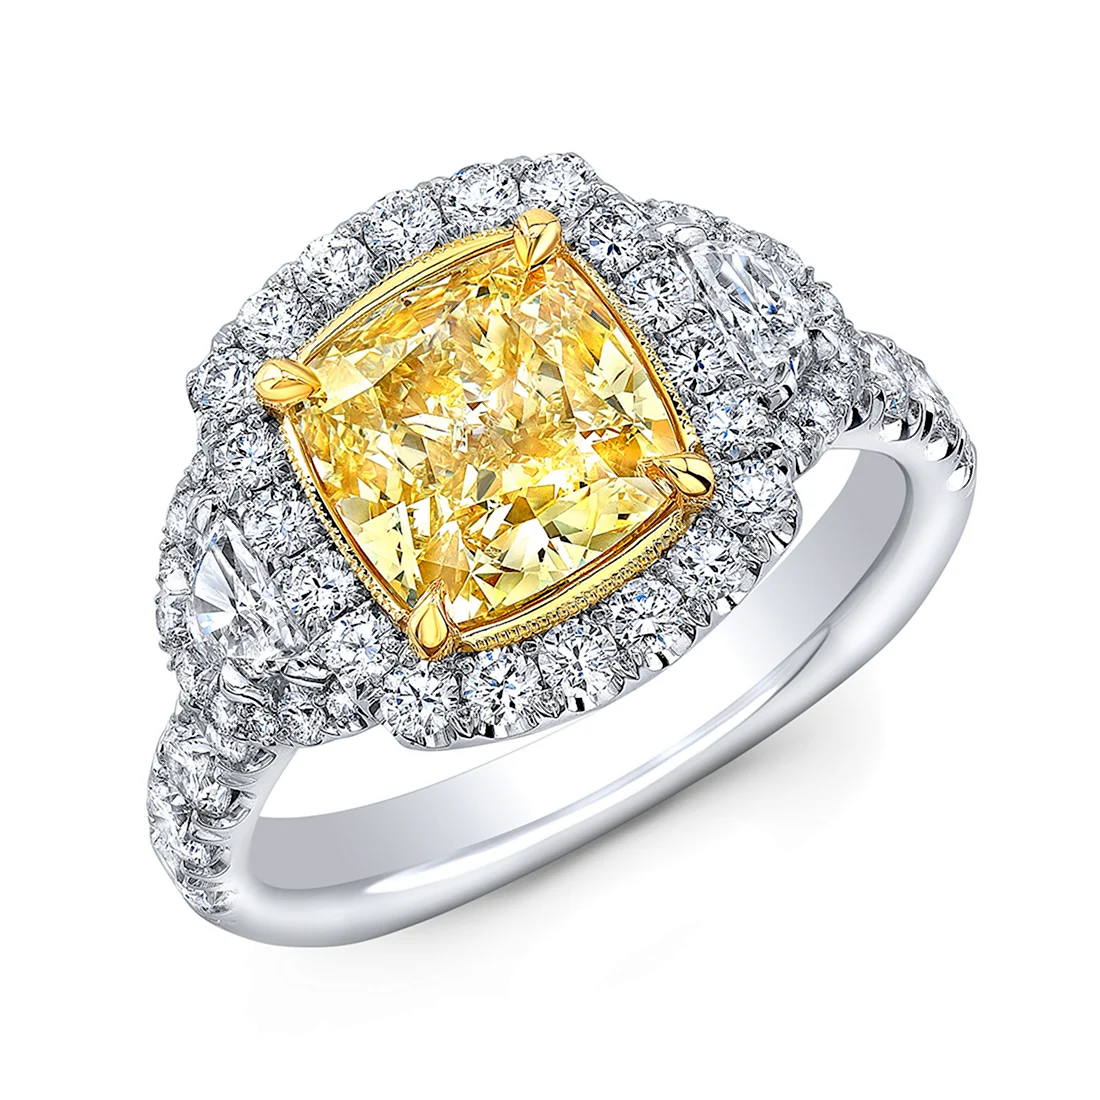 Fancy 20 Carat Yellow Diamond Ring